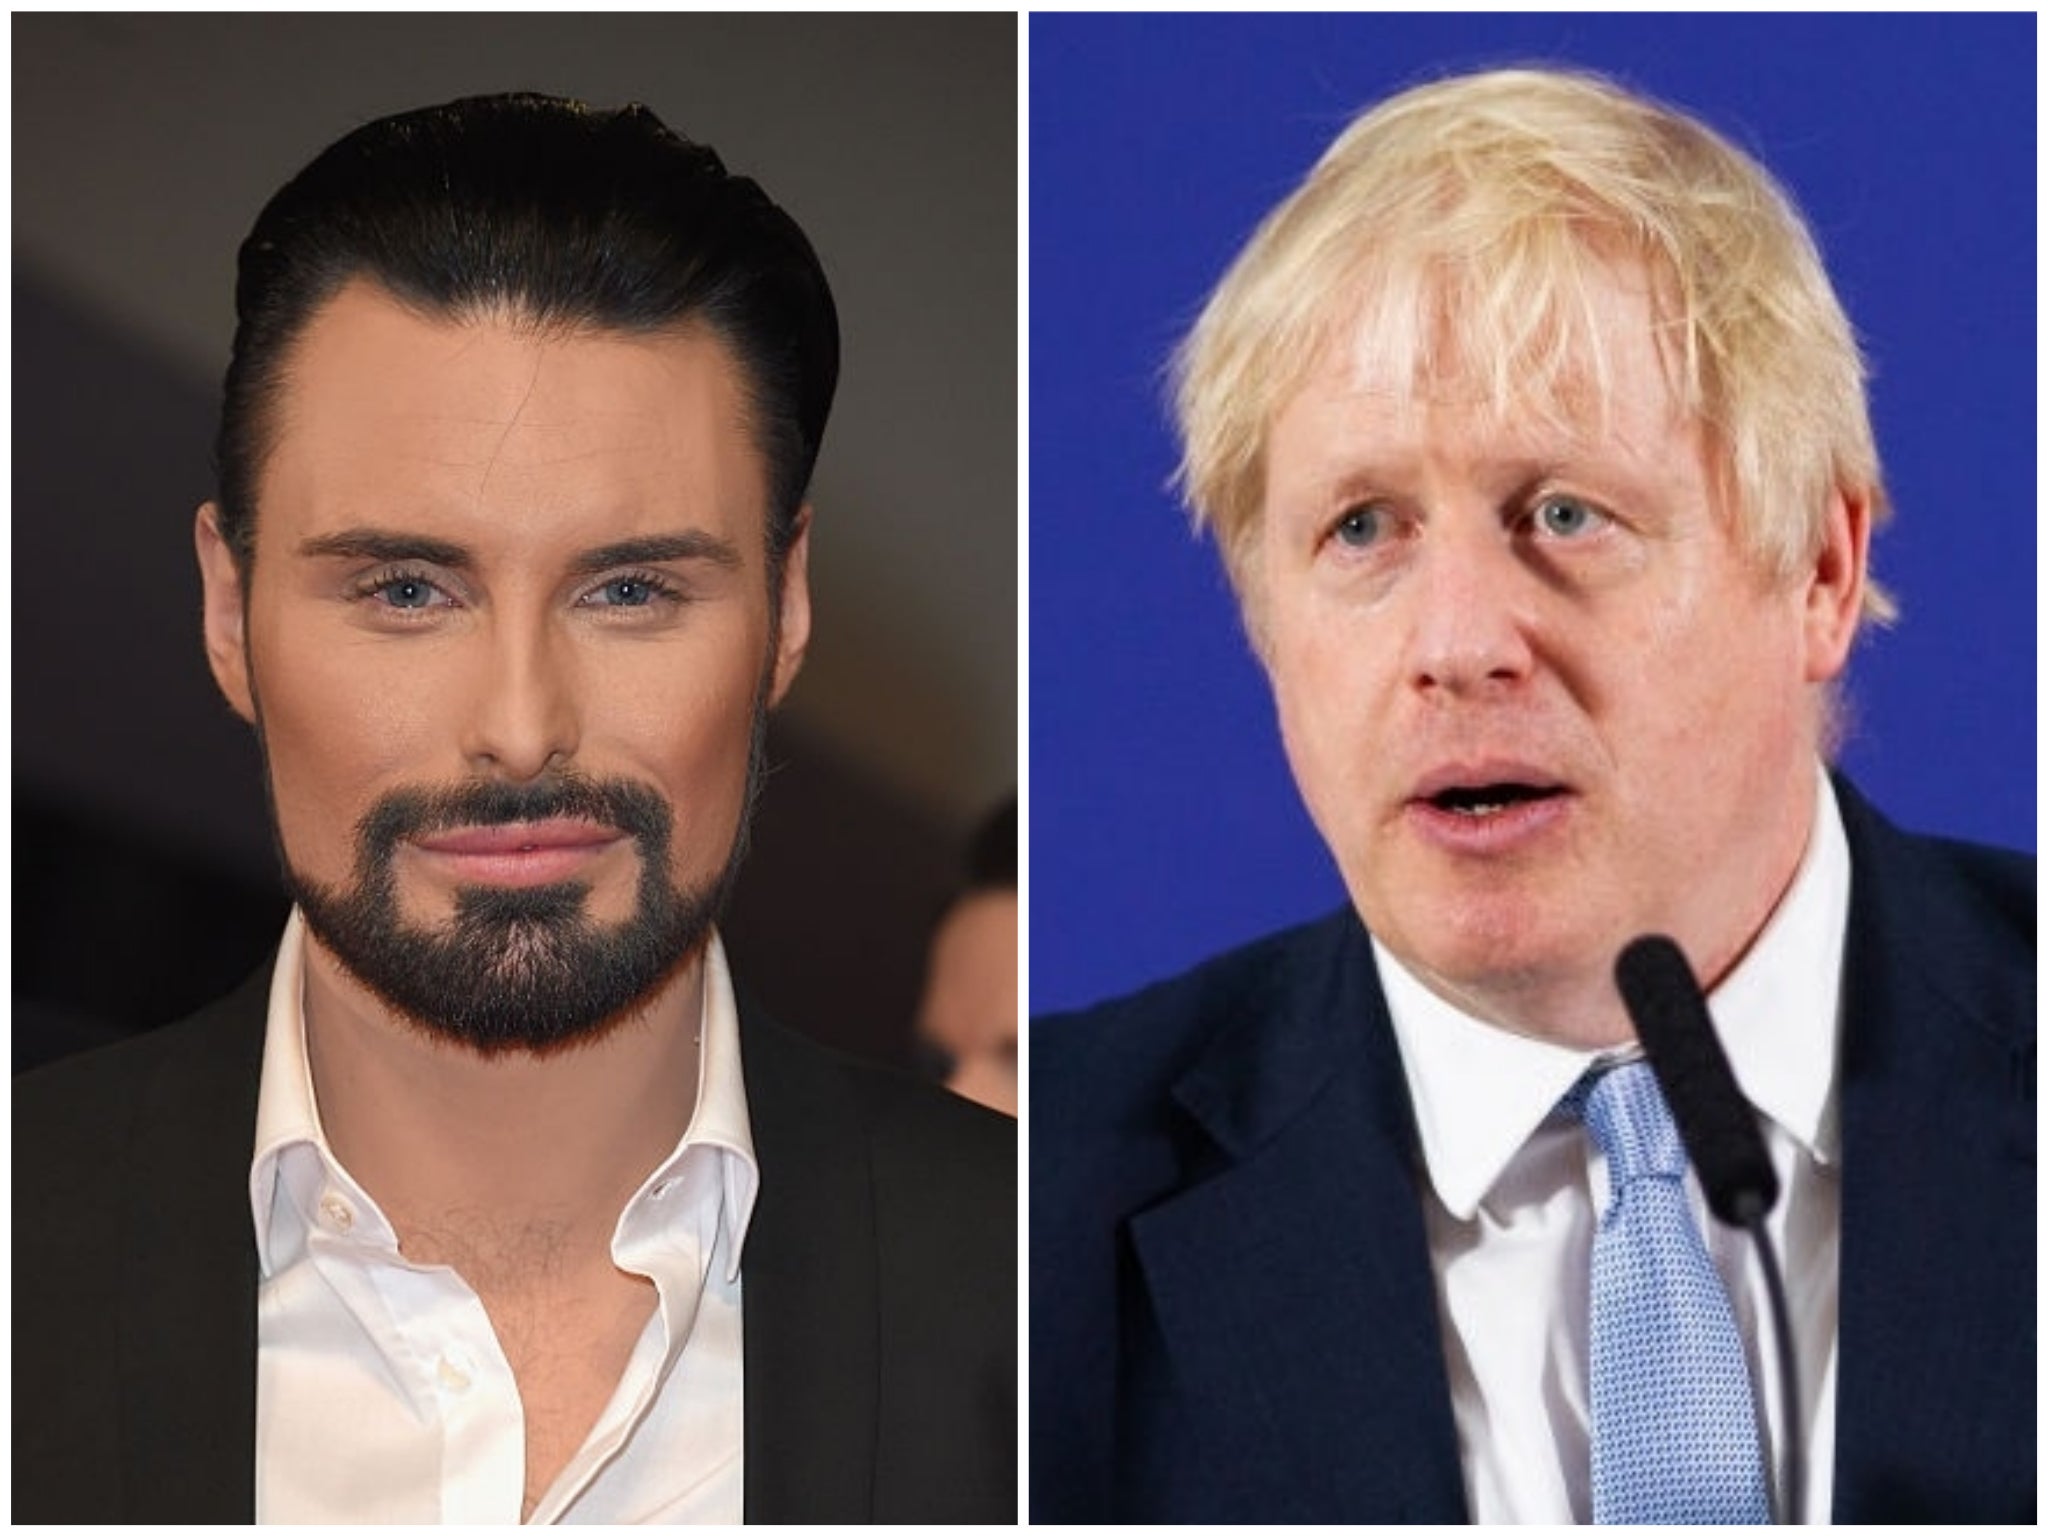 'Not qualified enough': TV presenter Rylan Clark-Neal (left) and Boris Johnson